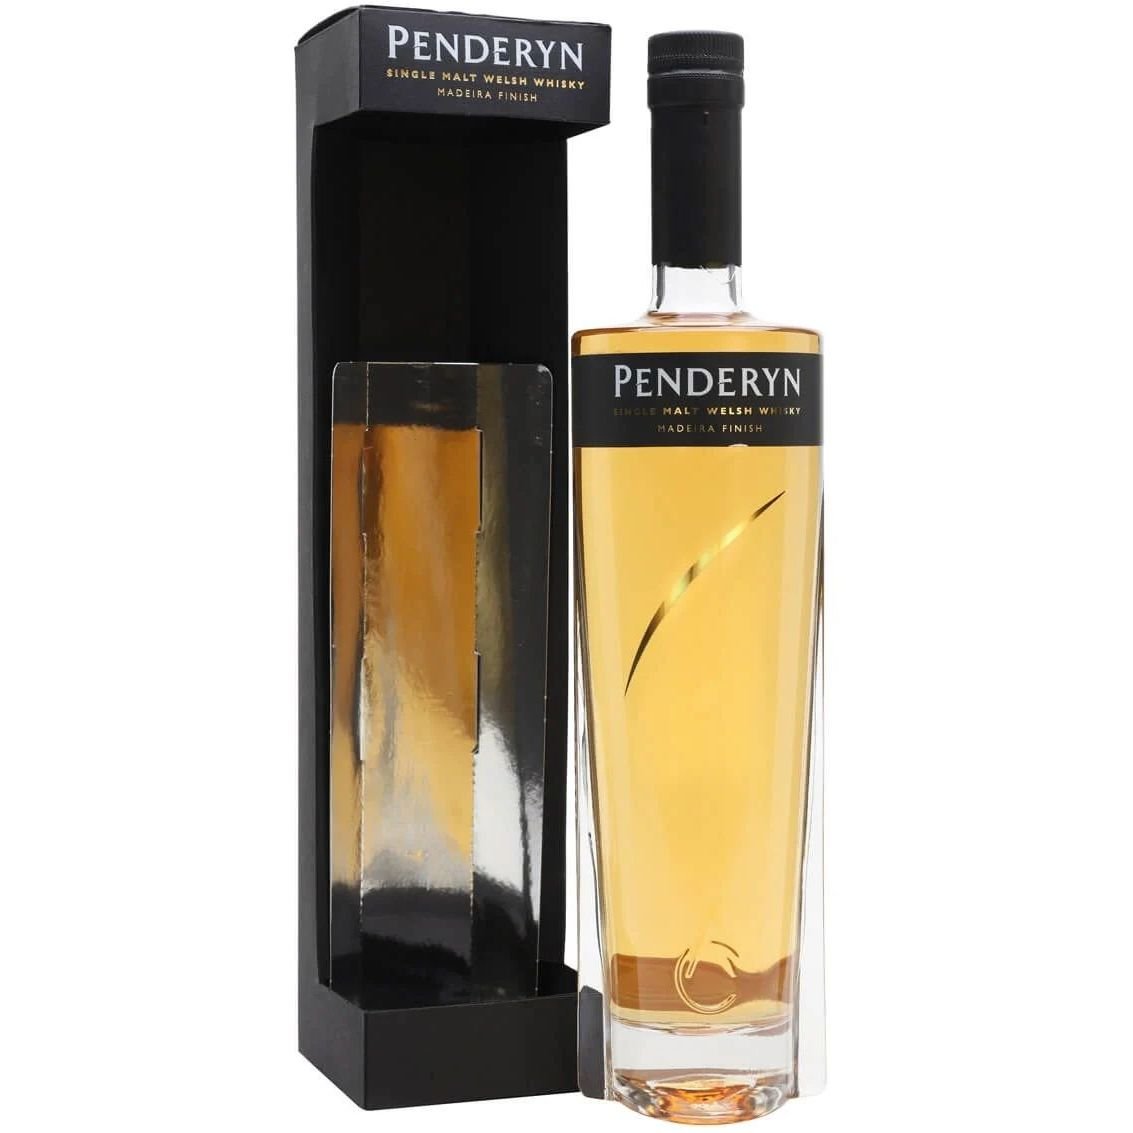 Віскі Penderyn Madeira Single Malt Welsh Whisky 46% 0.7 л у подарунковій упаковці - фото 1